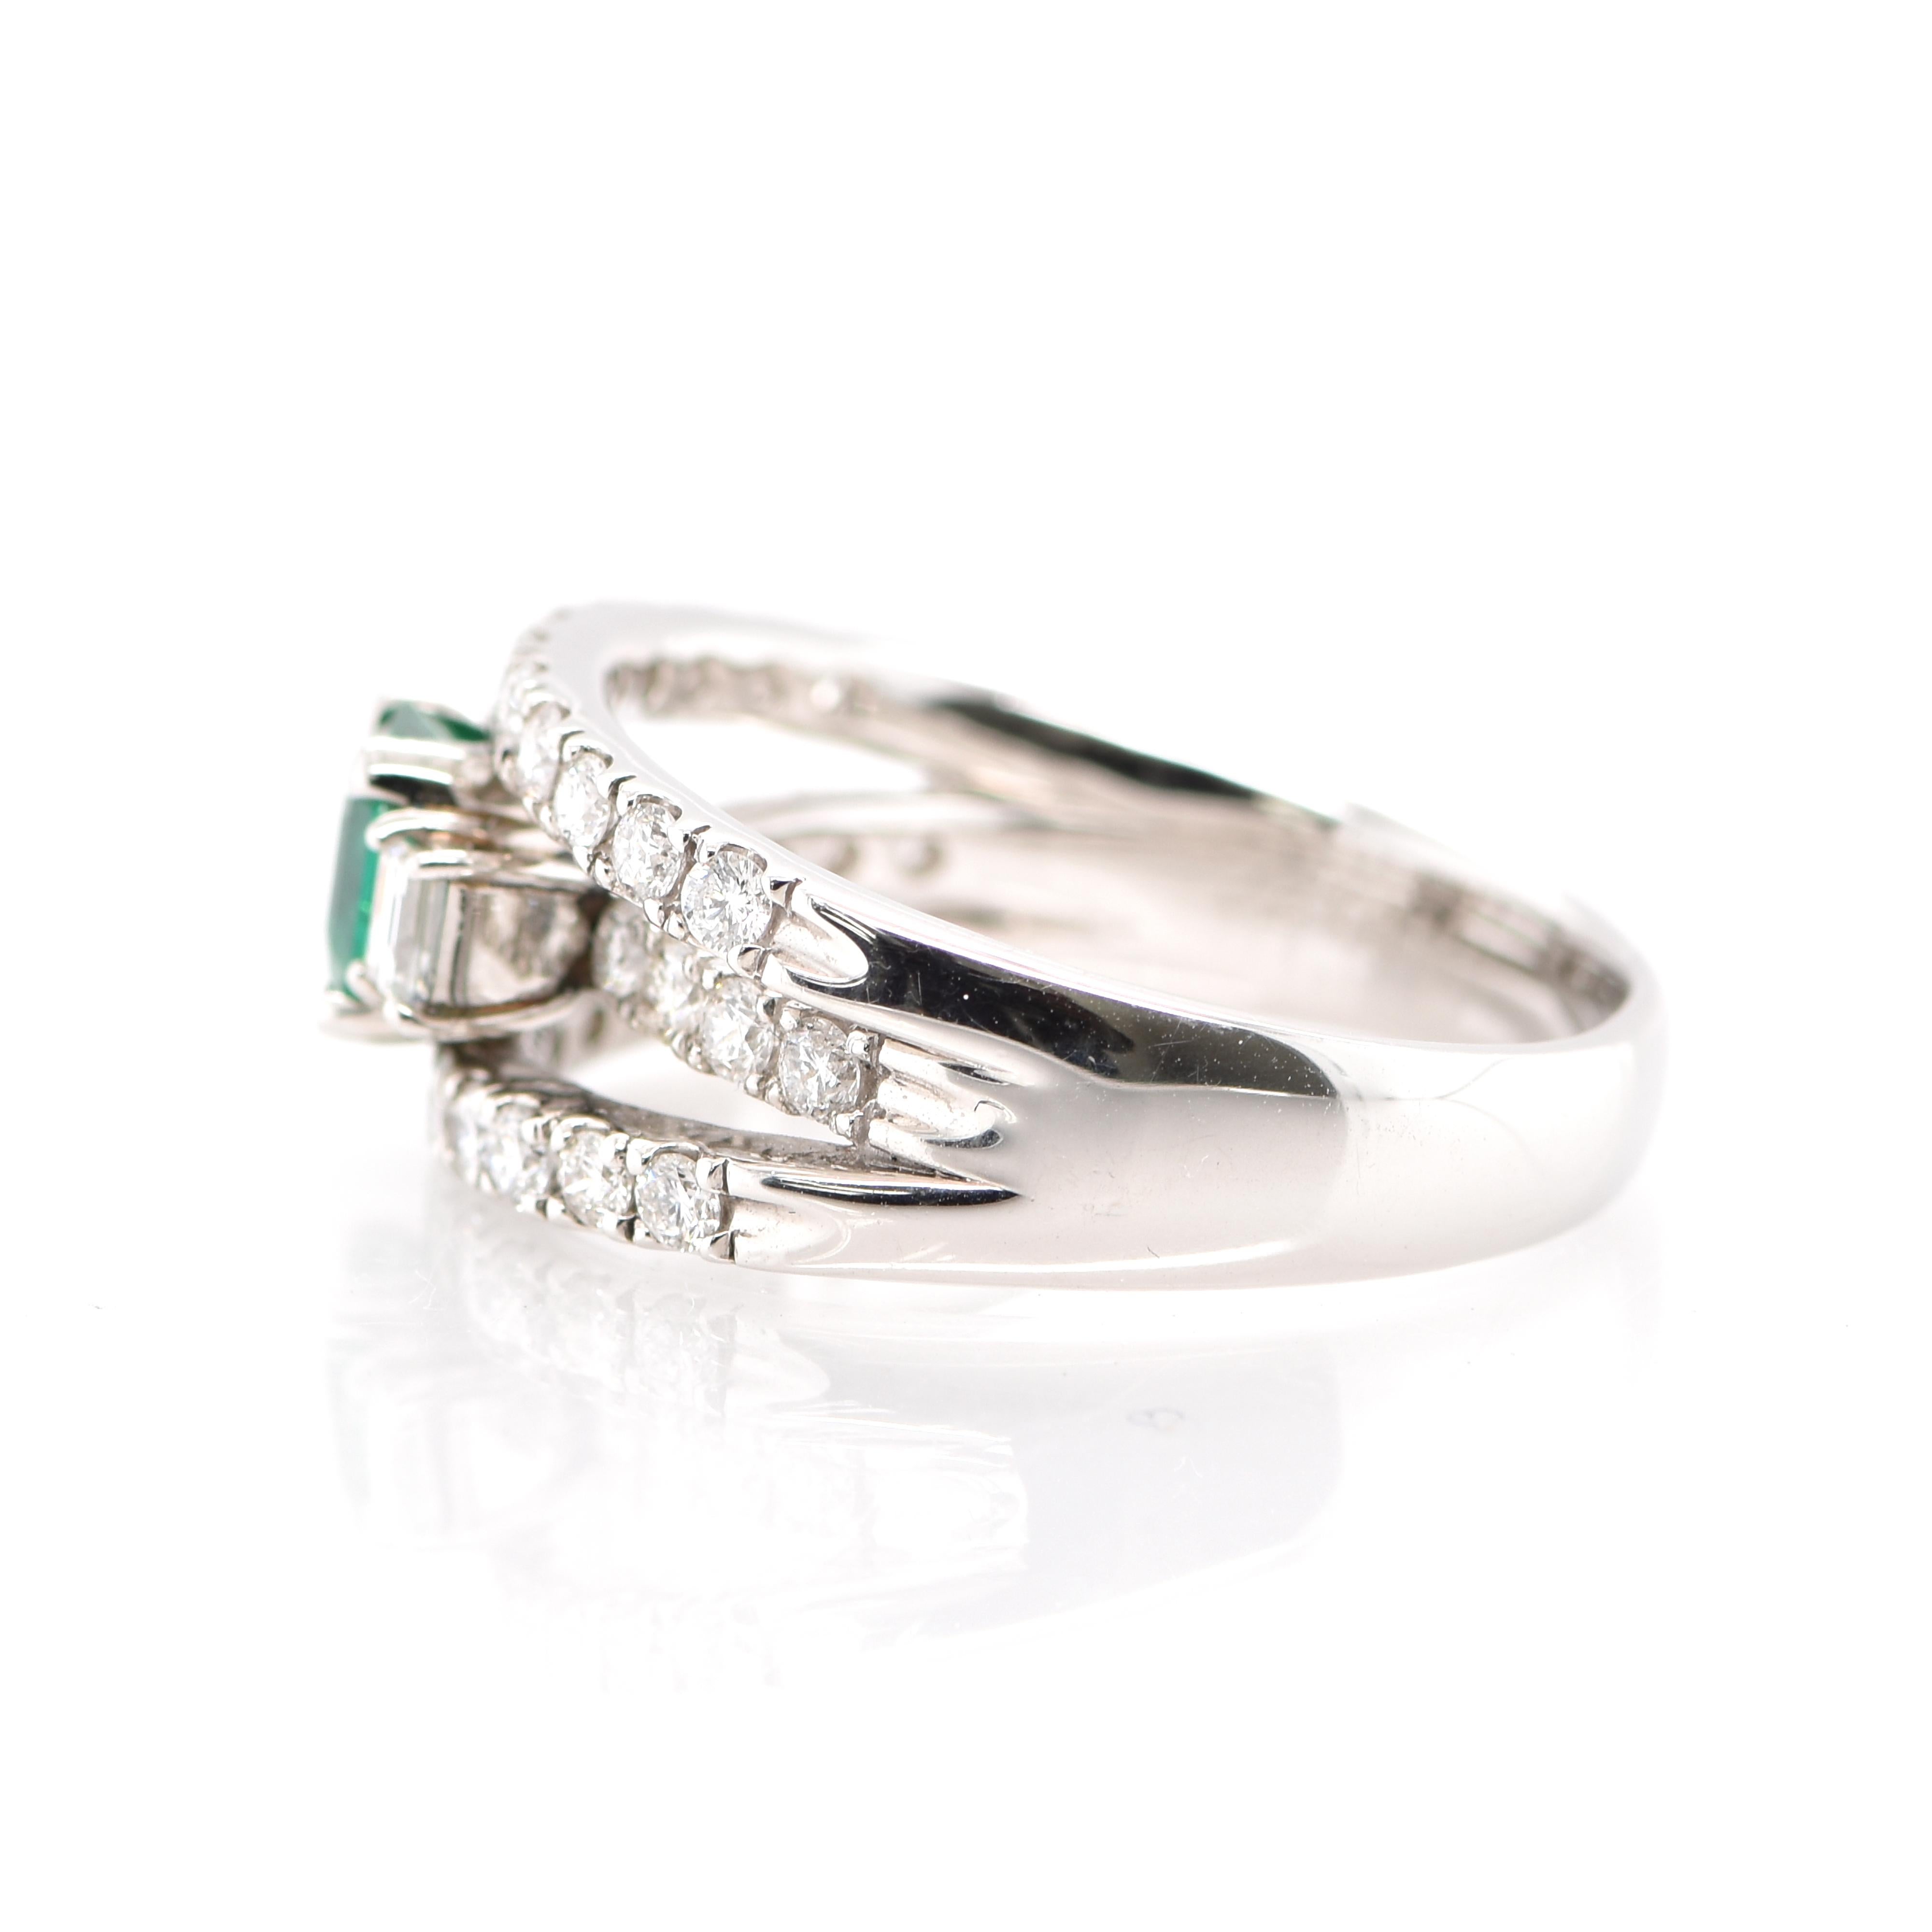 Emerald Cut 0.89 Carat Natural Emerald and Diamond Ring Set in Platinum